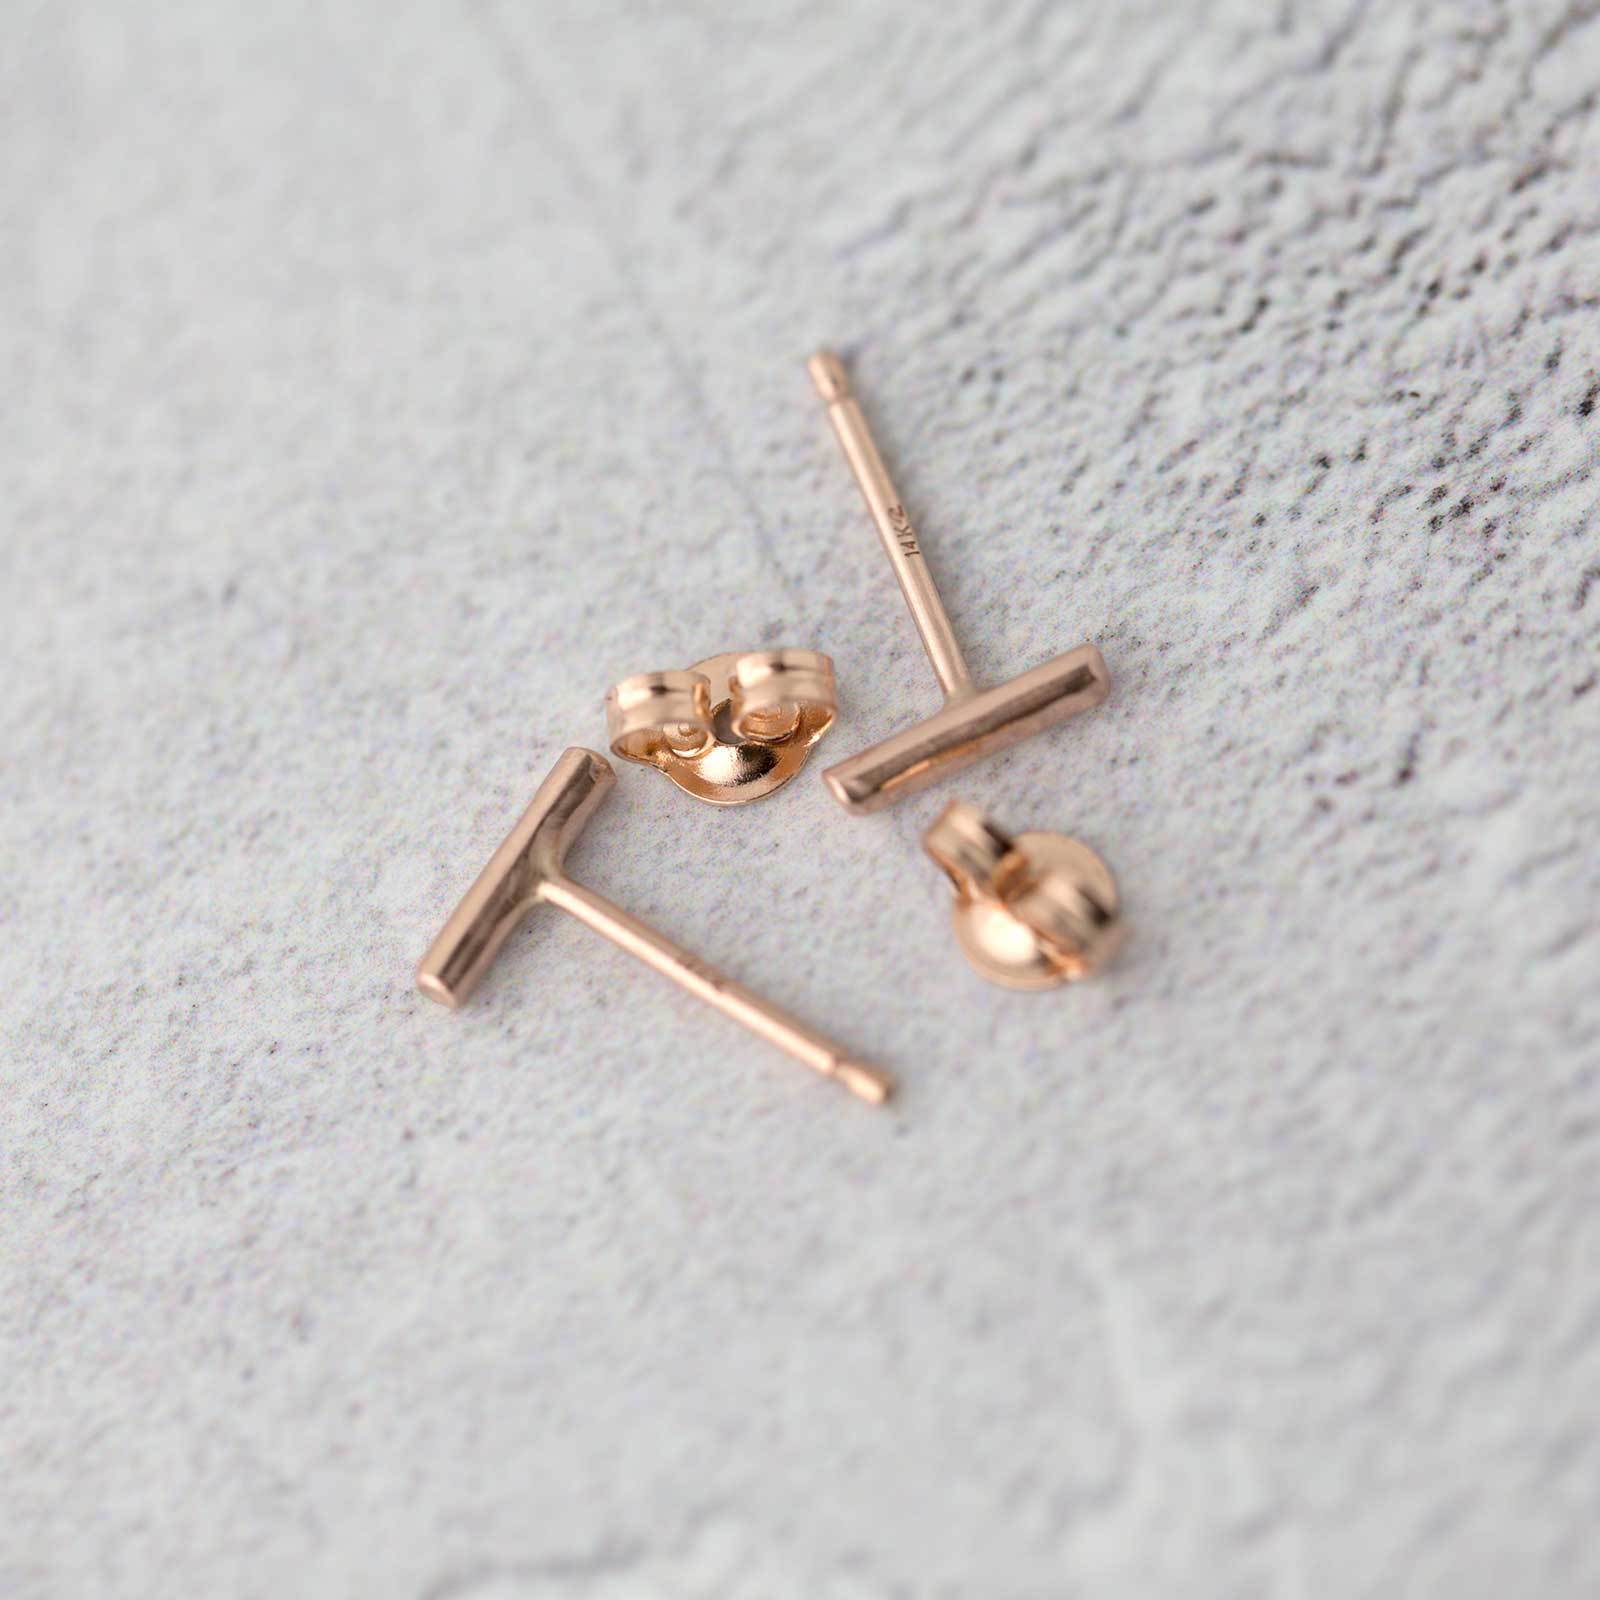 Tiny Bar Stud Earrings - 14K Rose Gold/14K Gold - Handmade Jewelry by Burnish